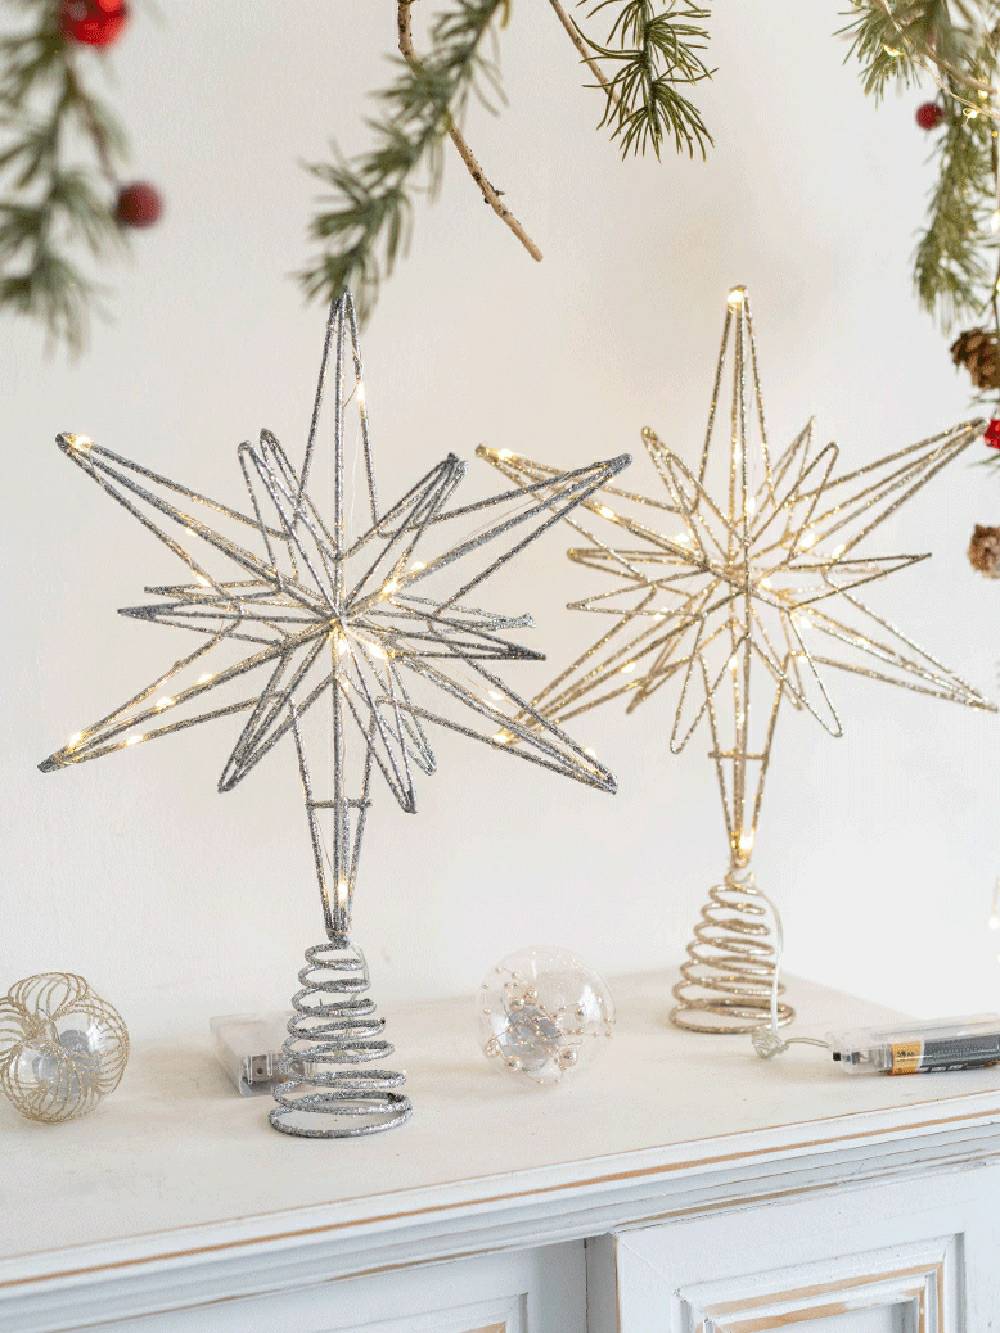 Illuminated Starry Christmas Decorative Art Piece